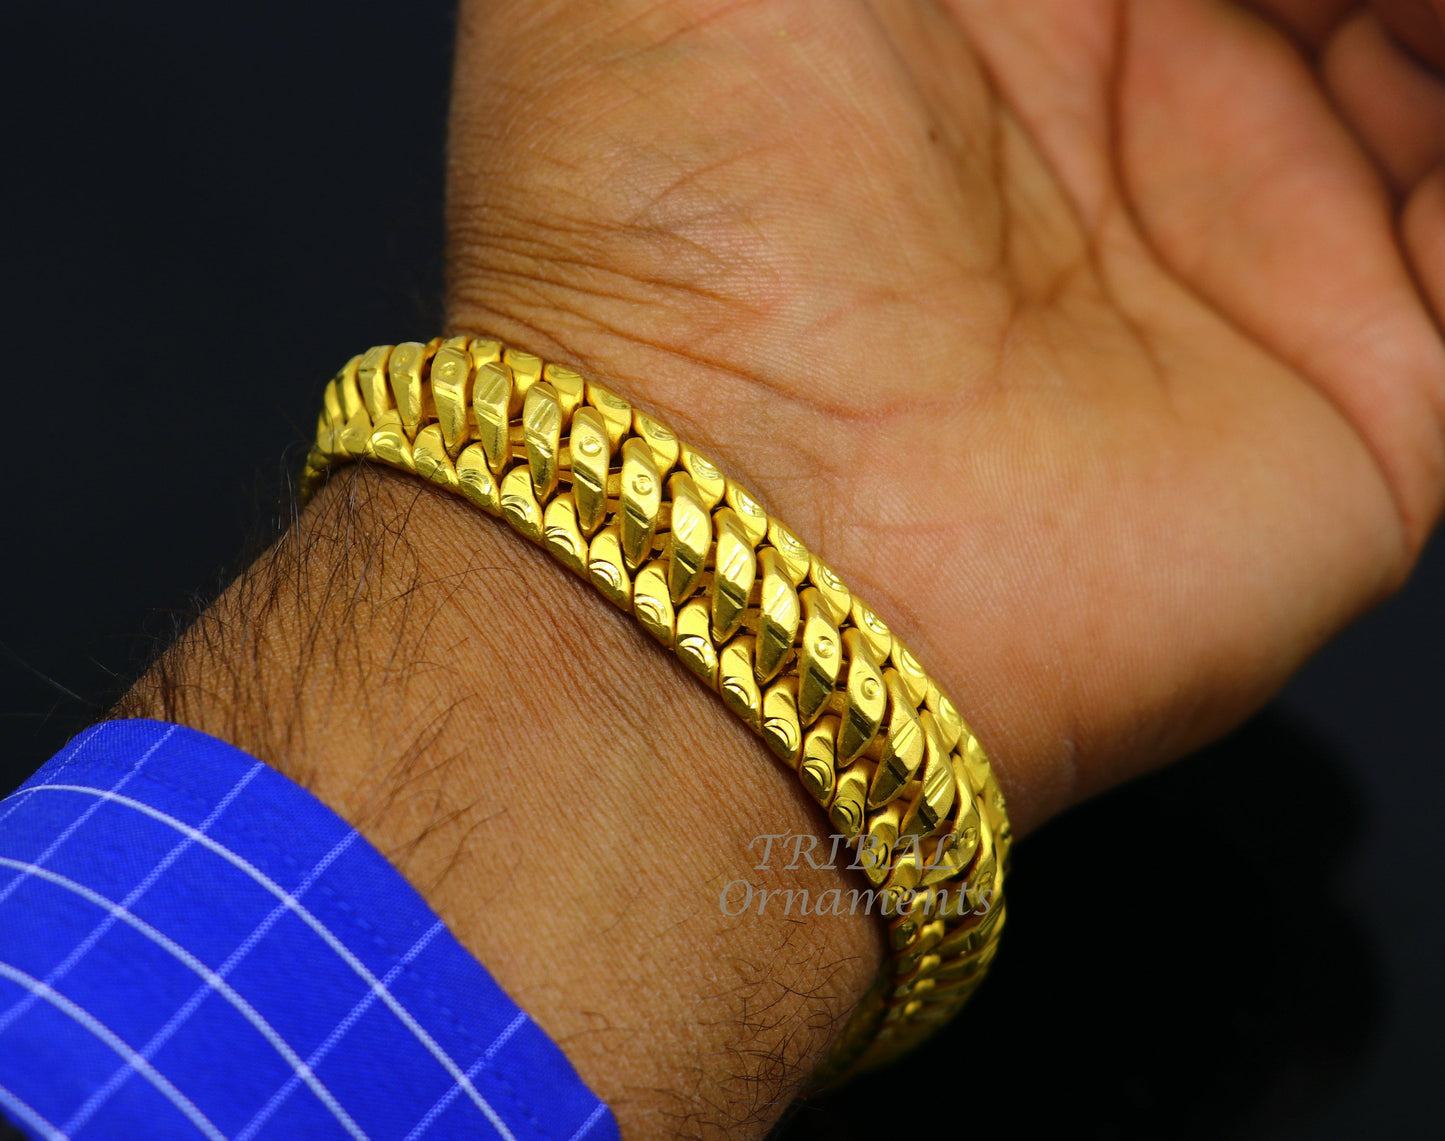 22kt yellow gold customized heavy men's bracelet, all sizes gifting bracelet, new fancy stylish bracelet men's wedding gift jewelry gbr40 - TRIBAL ORNAMENTS